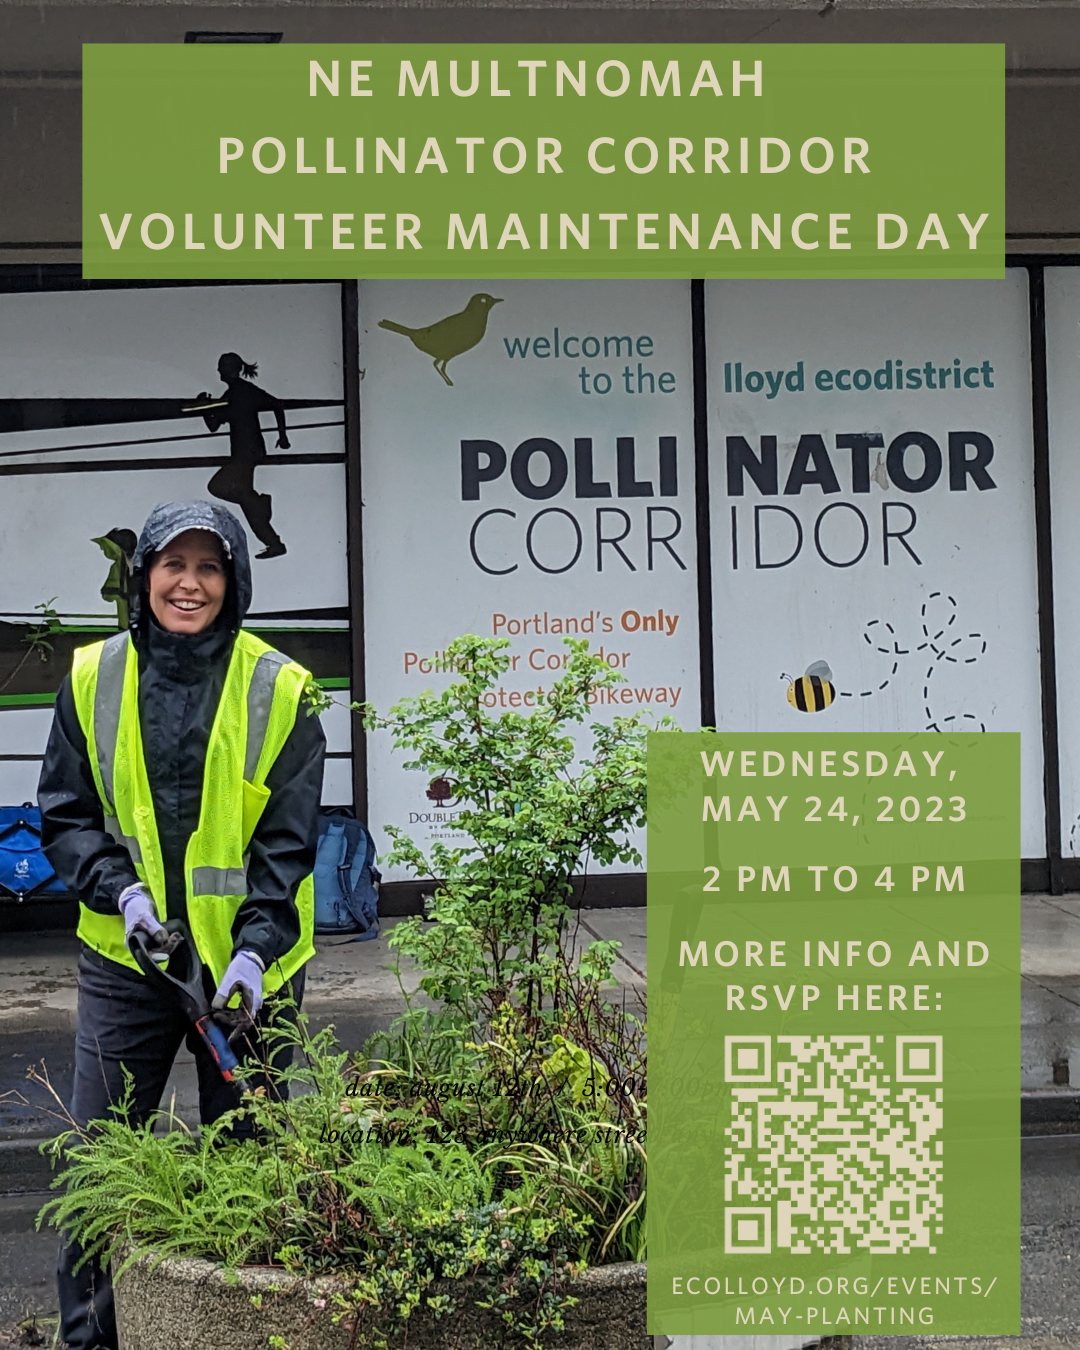 Volunteer to maintain the NE Multnomah Pollinator Corridor